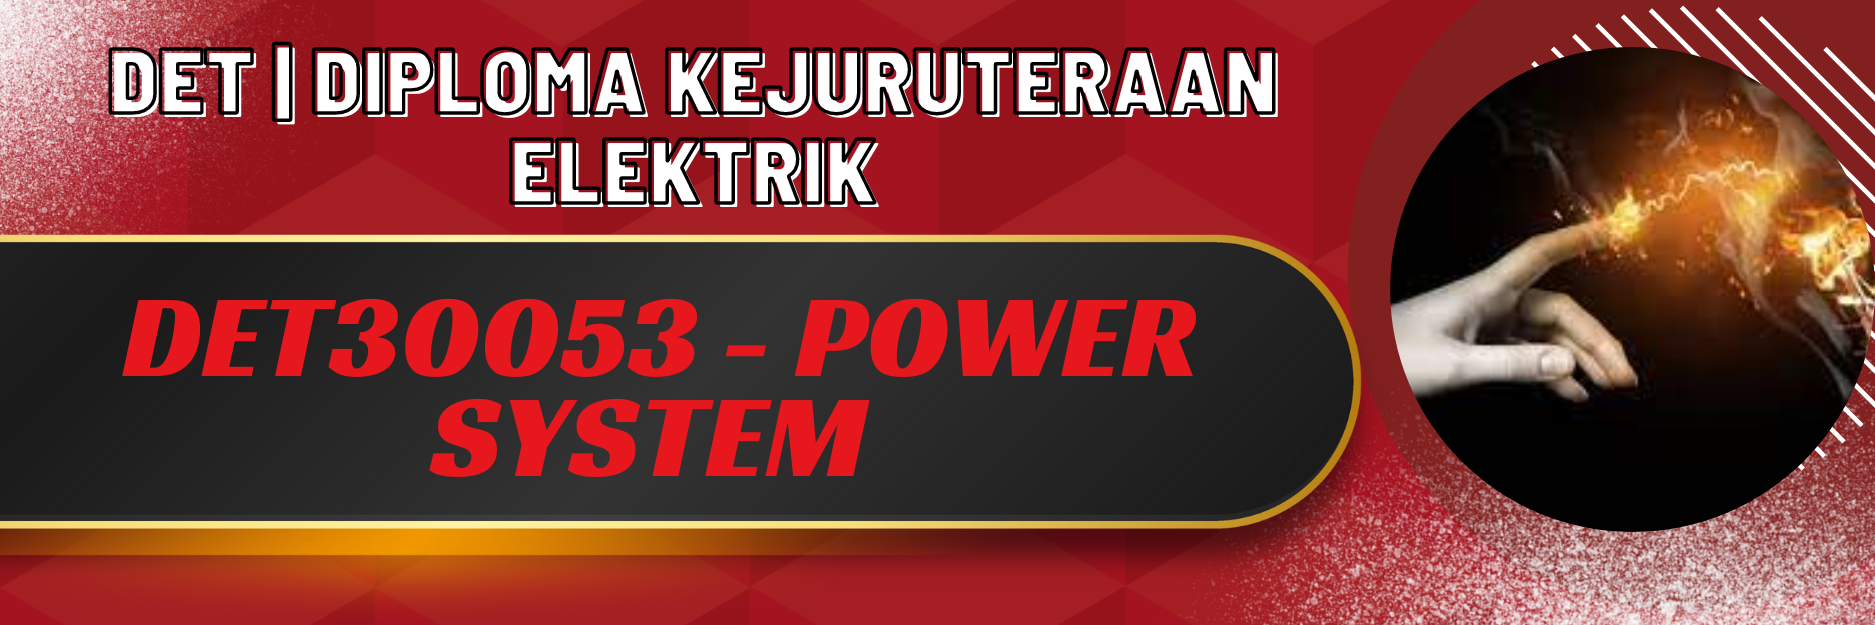 DET30053 - POWER SYSTEM